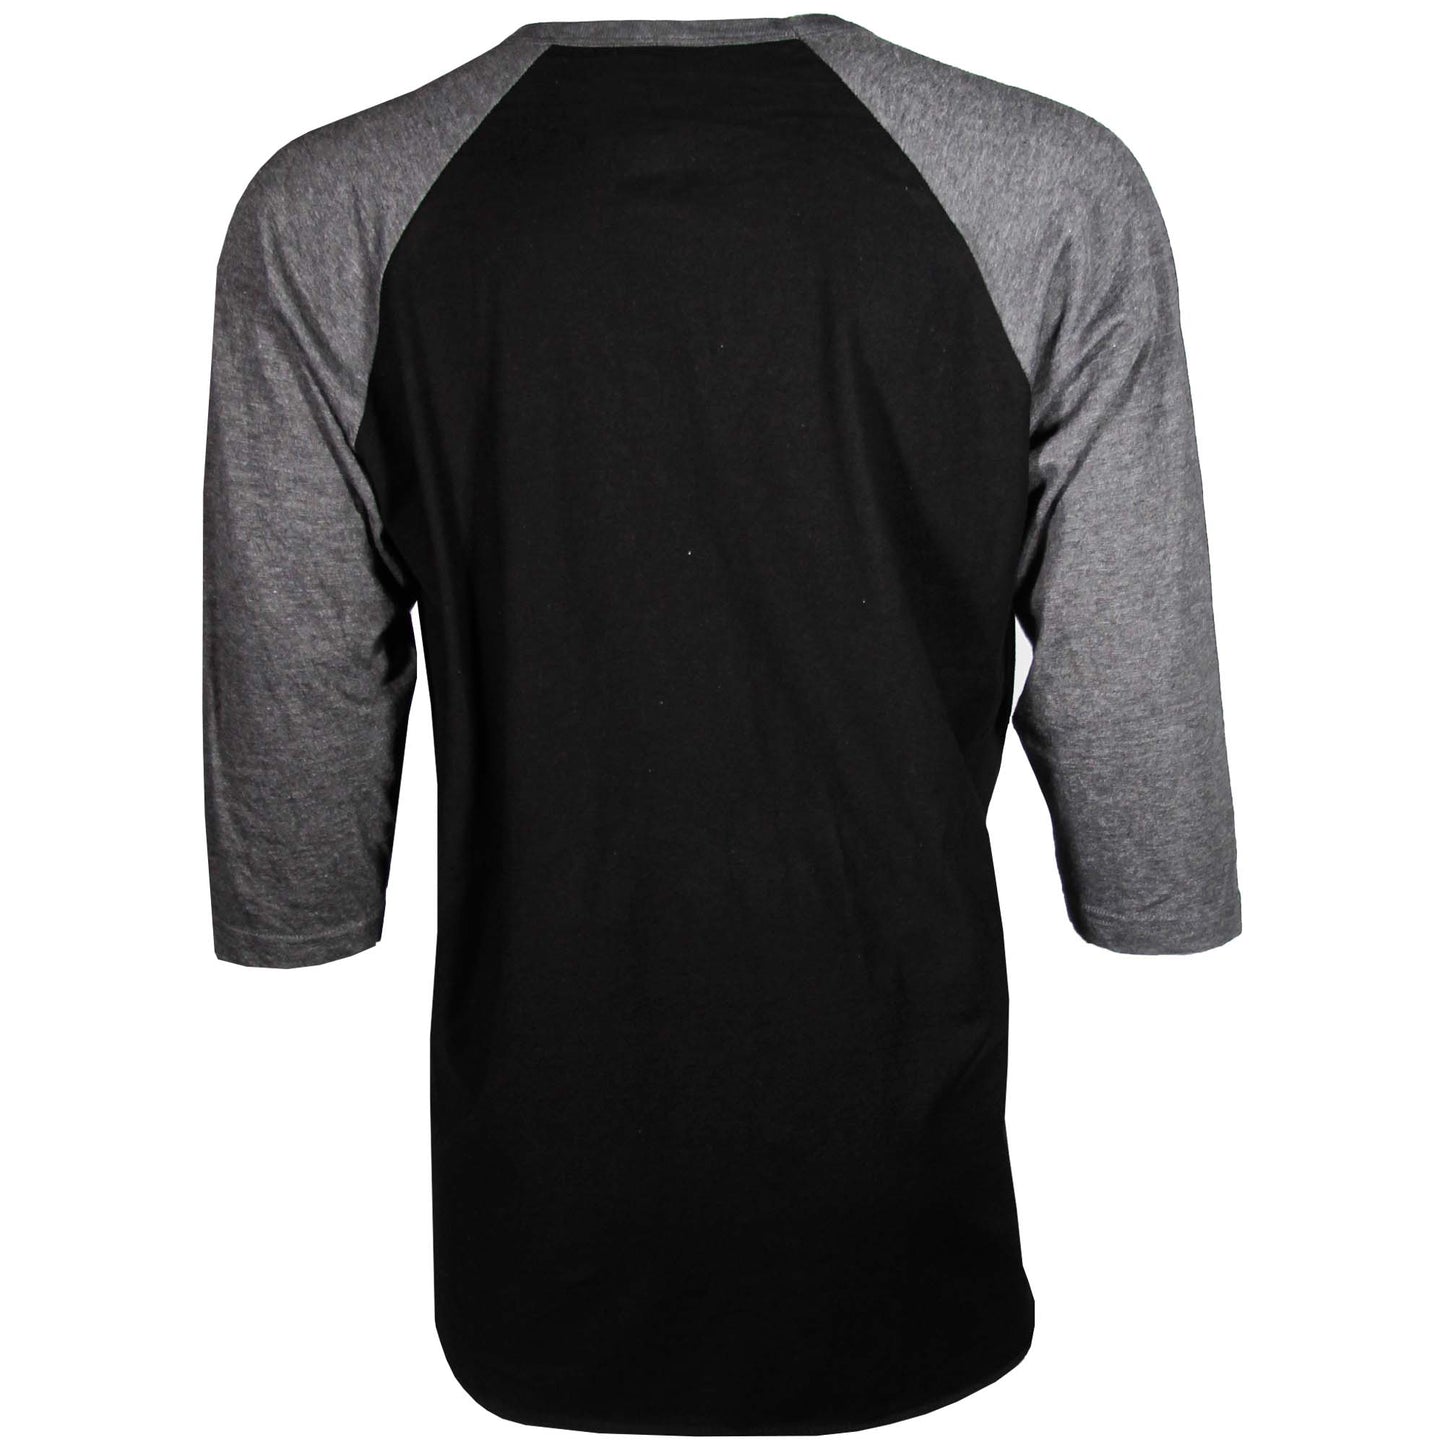 Gold & Silver Pawn Shop Black & Grey Reglan Sleeve T-Shirt